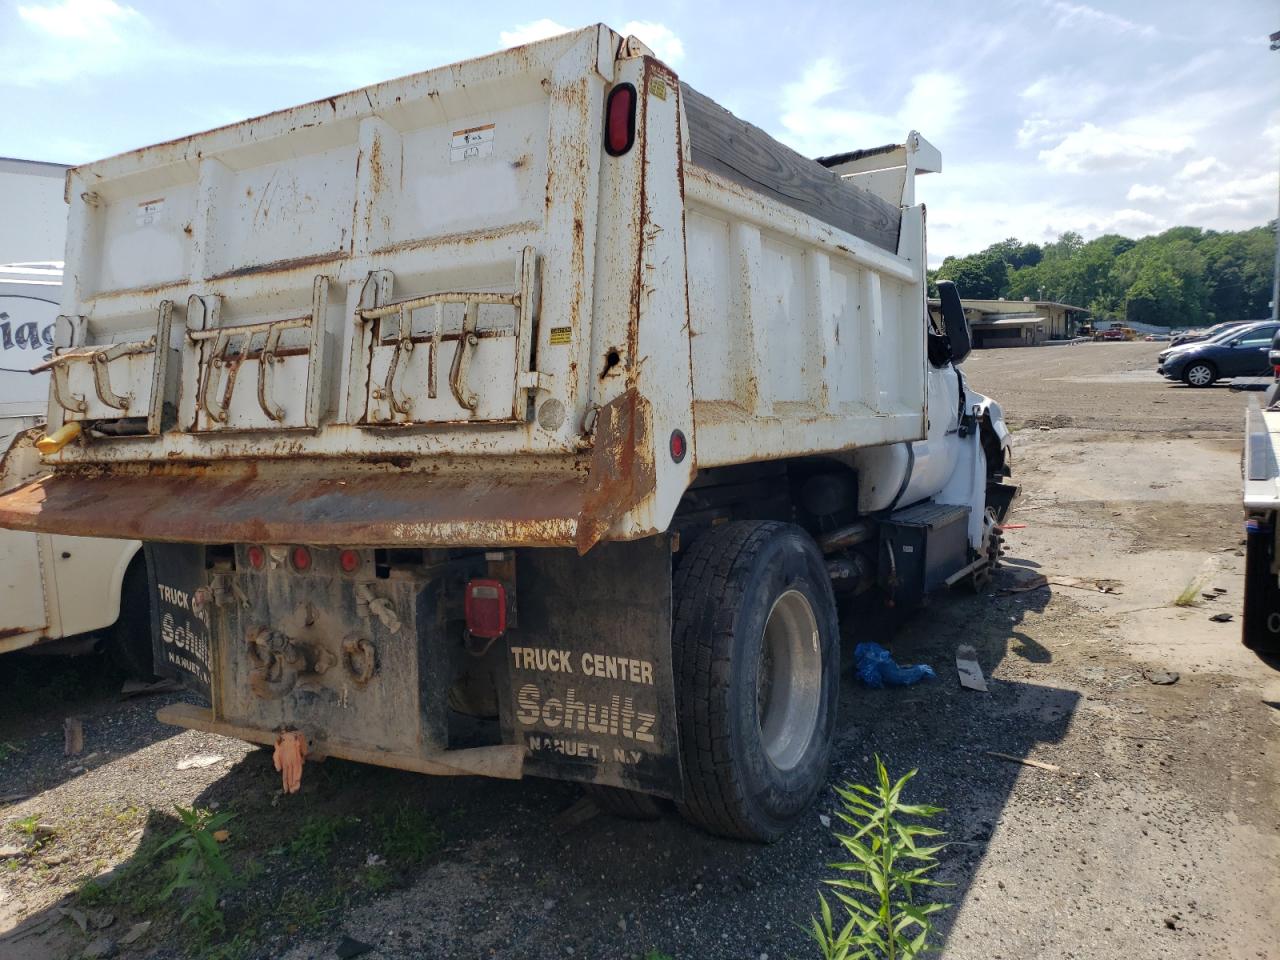 Salvage 2016 Ford F750 Dump Truck